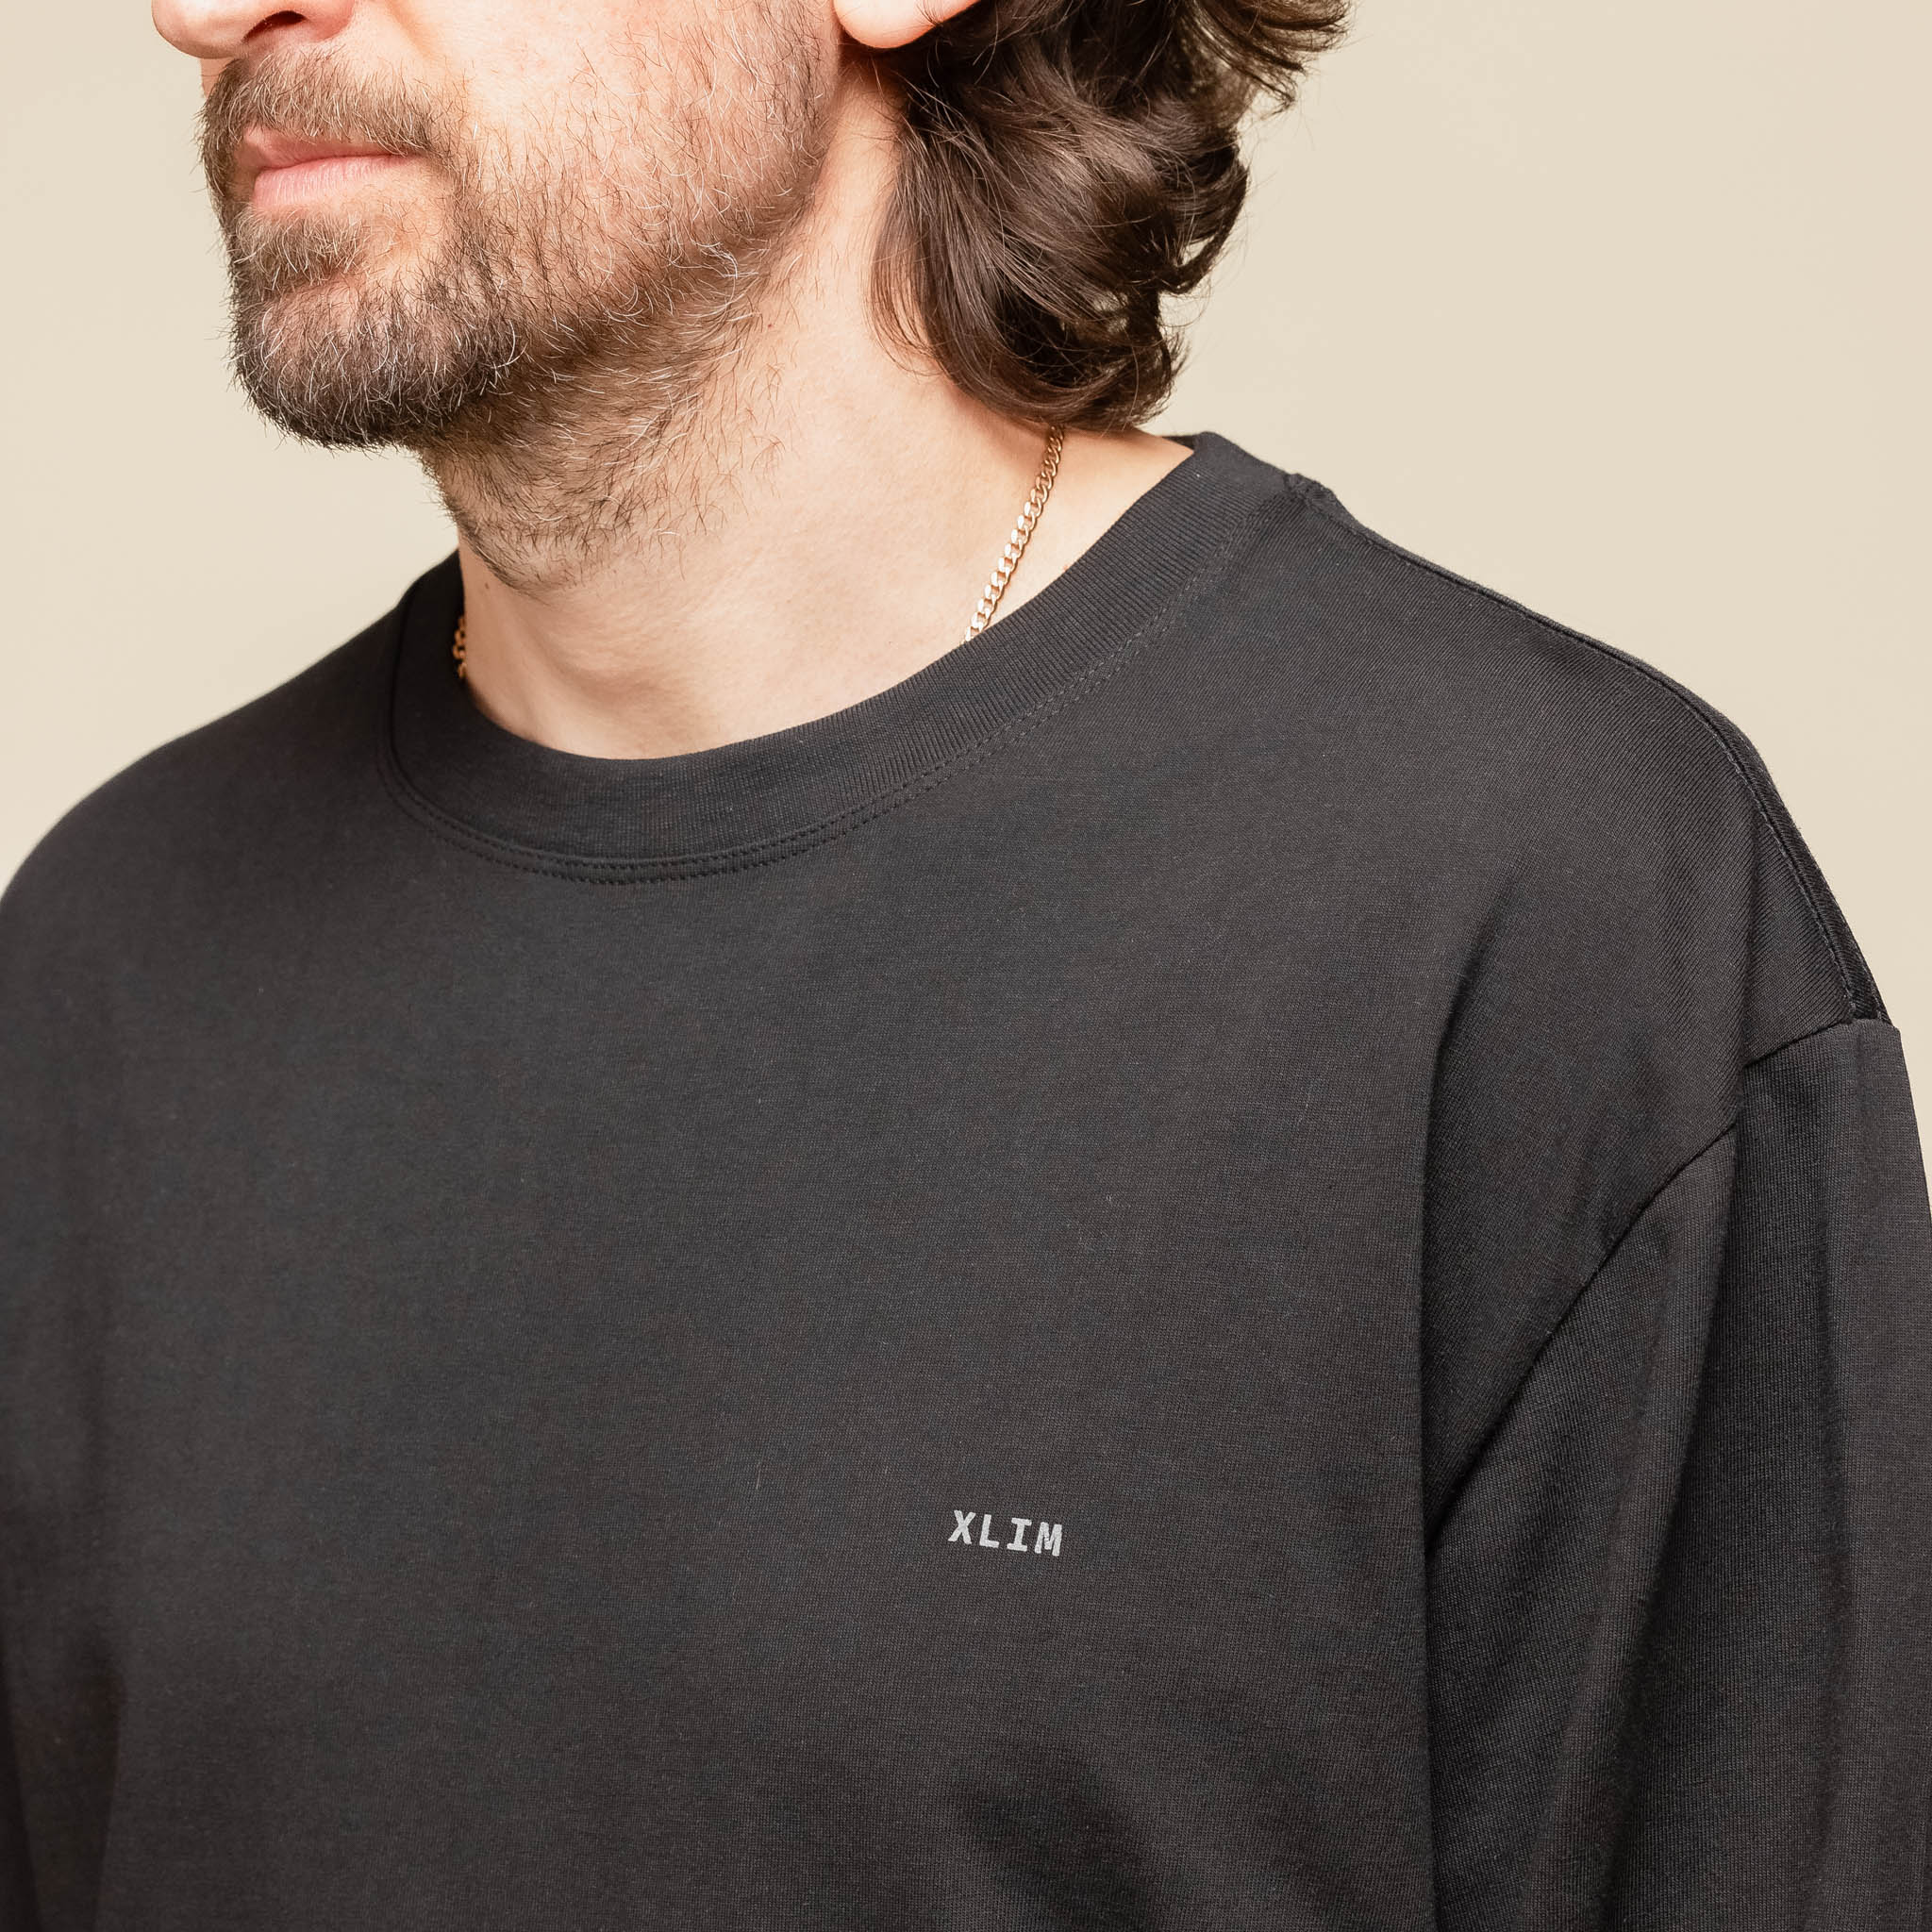 XLIM - EP.5 01 Long Sleeve T-Shirt - Black